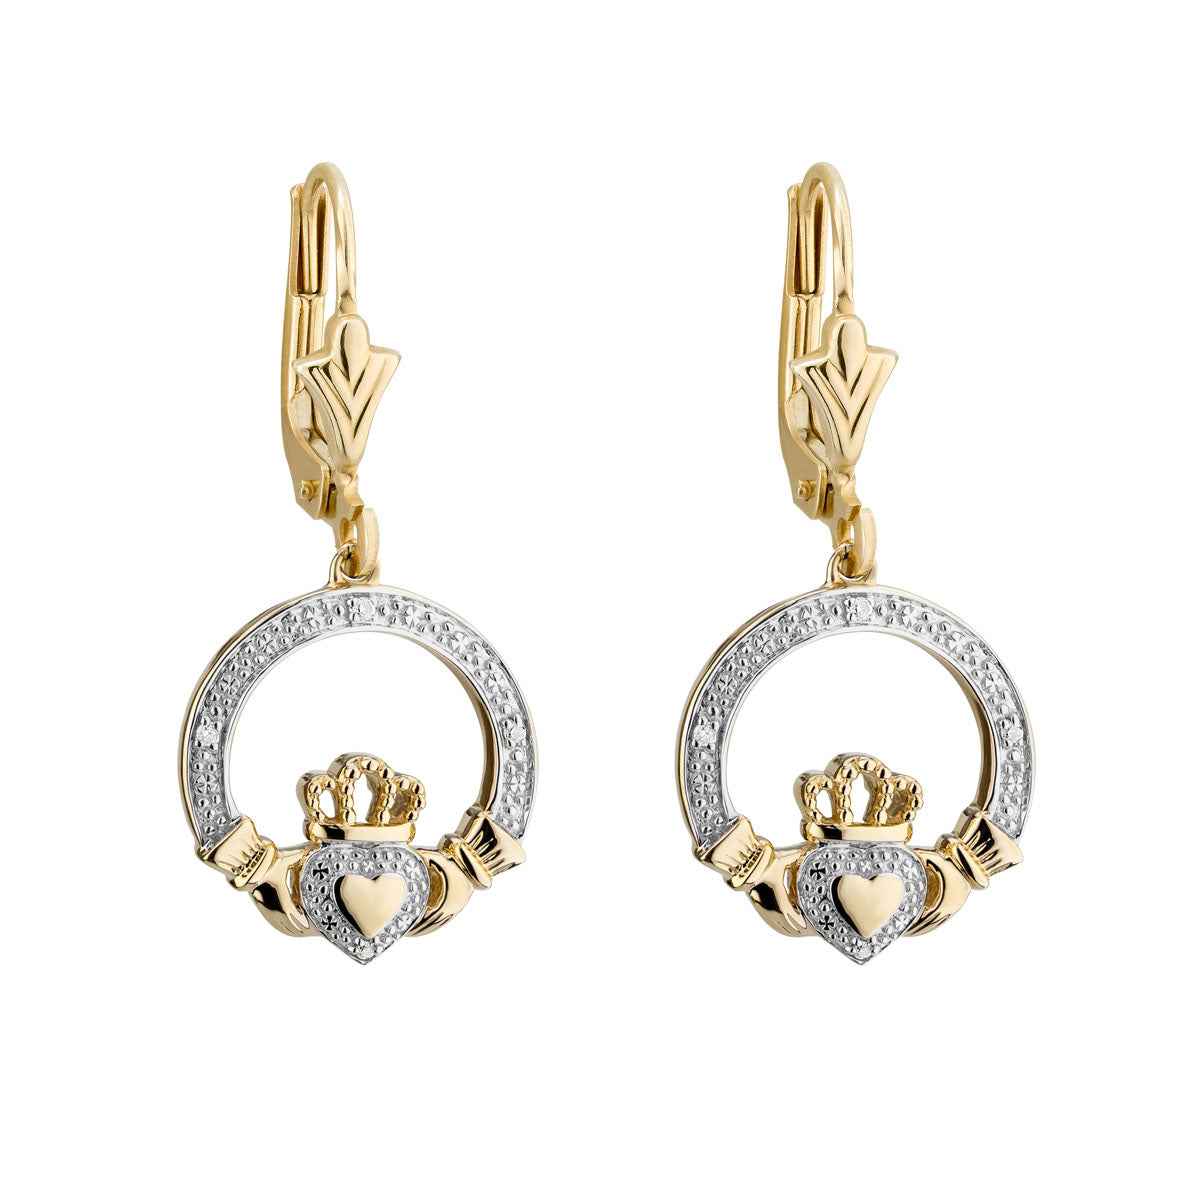 10k gold diamond claddagh drop earrings s33977 from Solvar